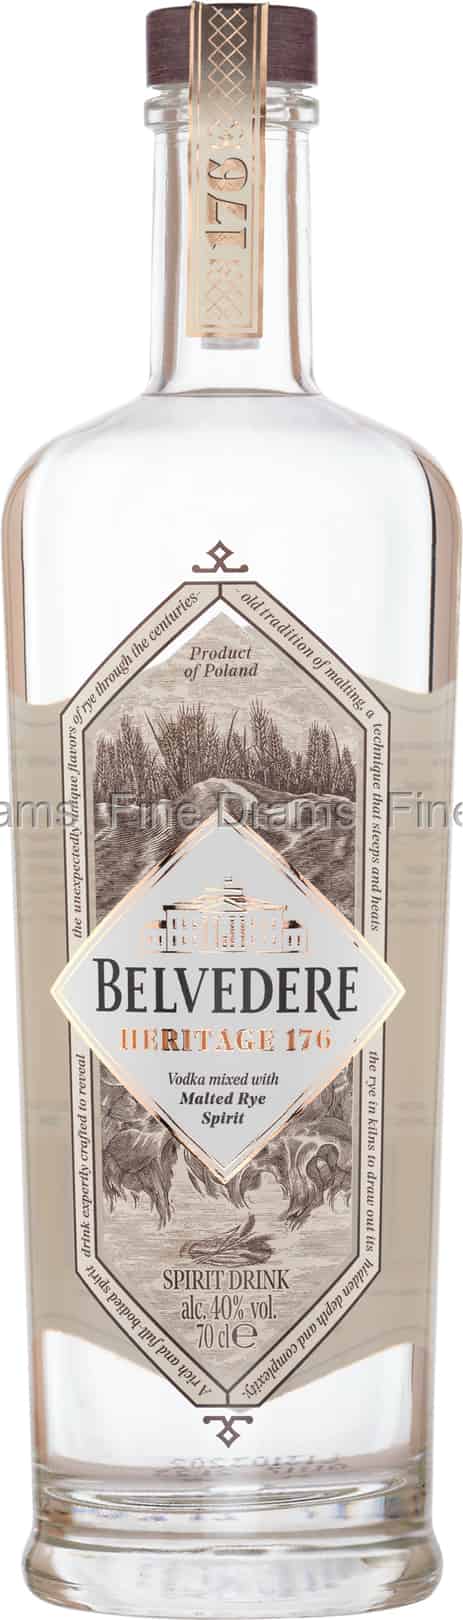 BELVEDERE - Belvedere vodka 700ml